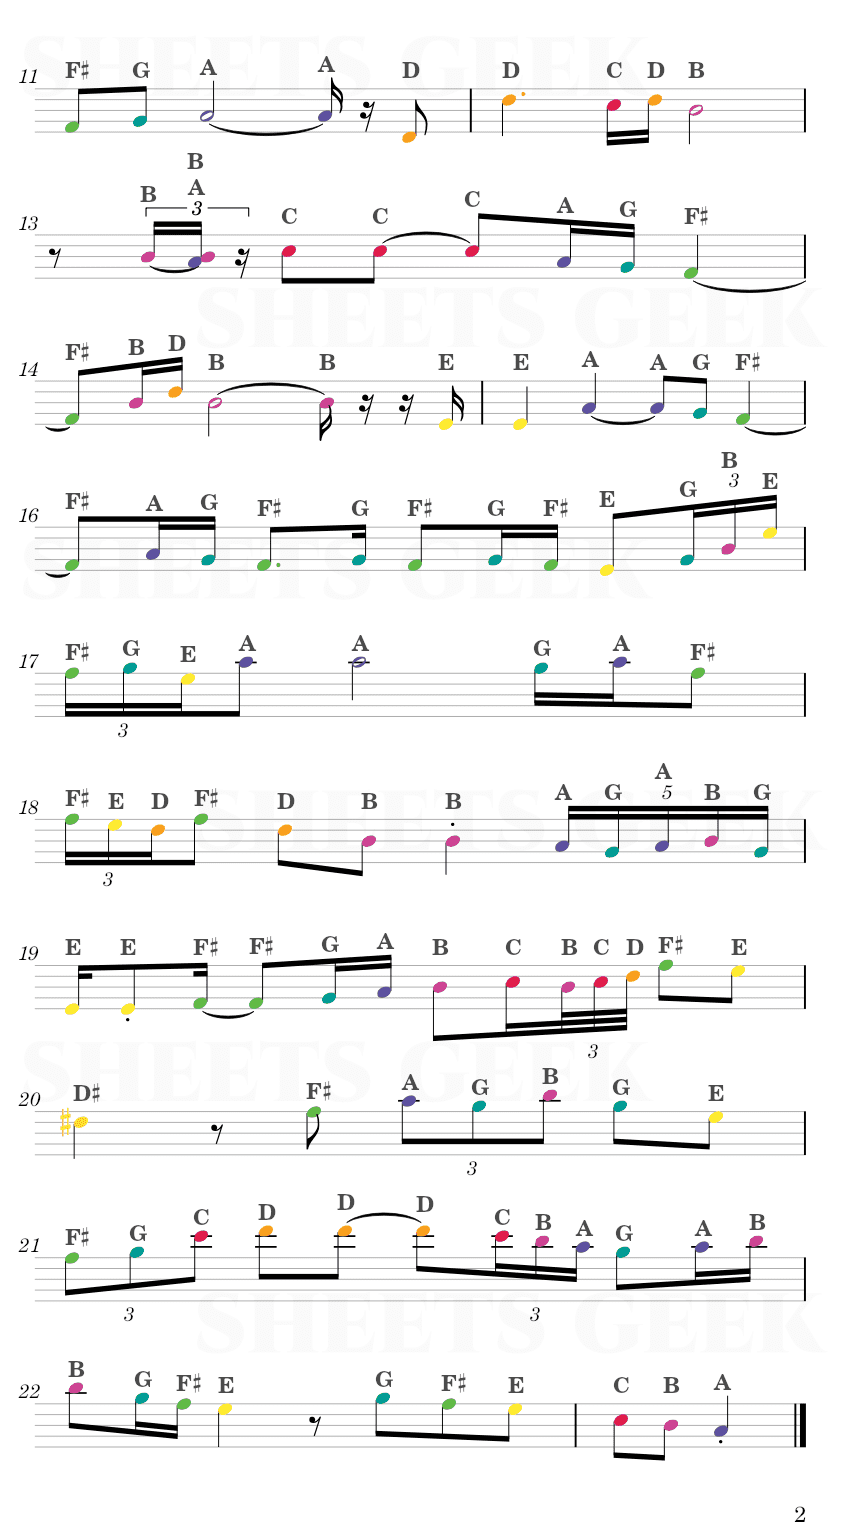 Autumn Leaves - Joseph Kosma Easy Sheet Music Free for piano, keyboard, flute, violin, sax, cello page 2